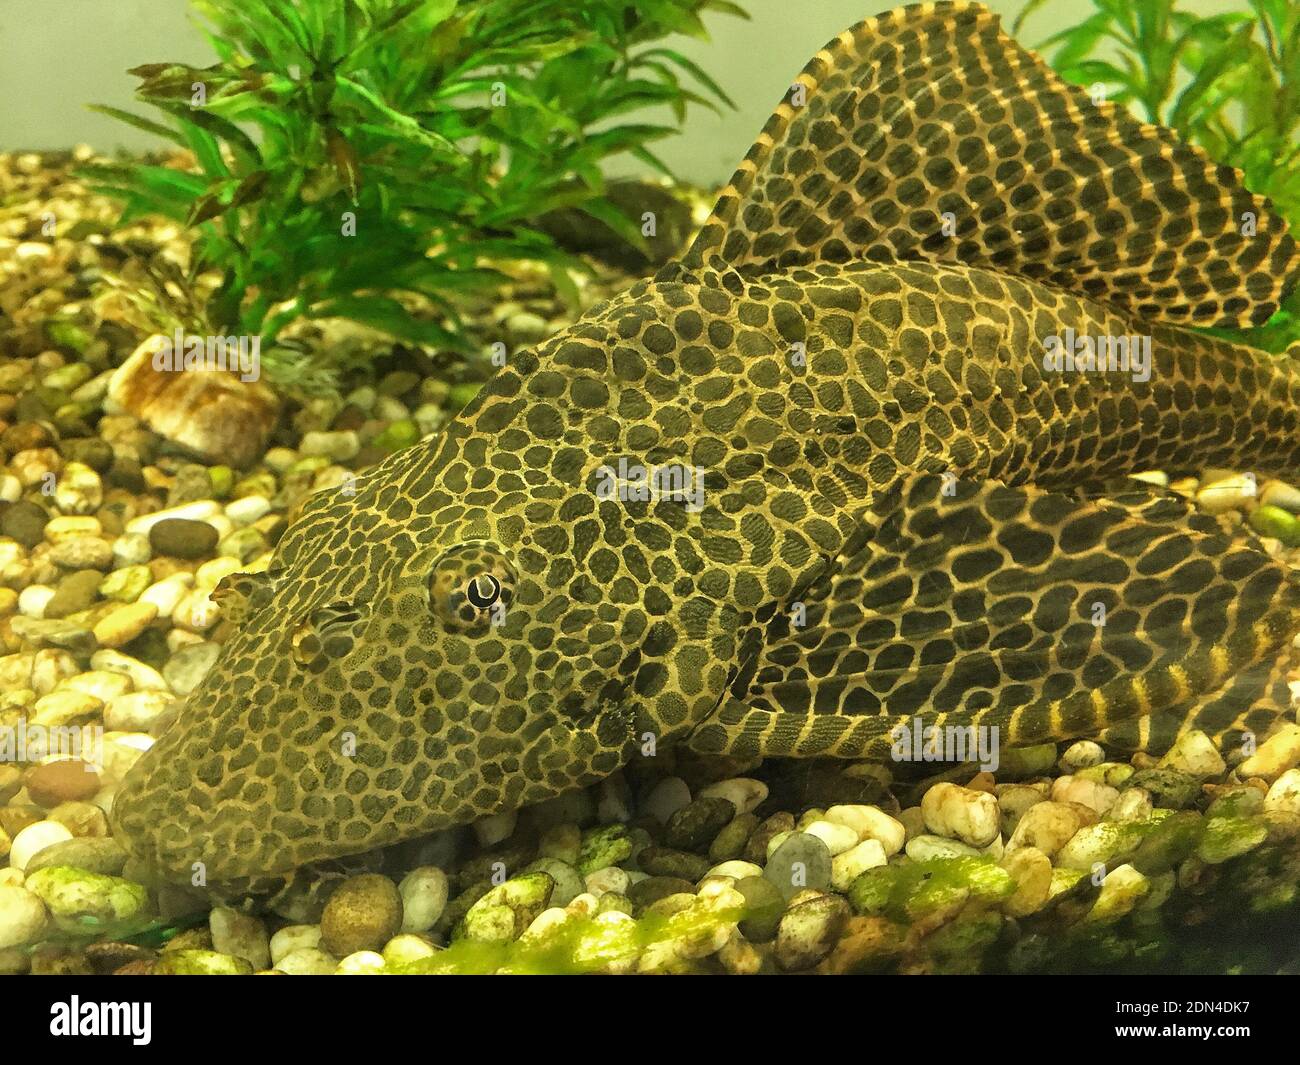 Aquarium catfish hi-res stock photography and images - Alamy